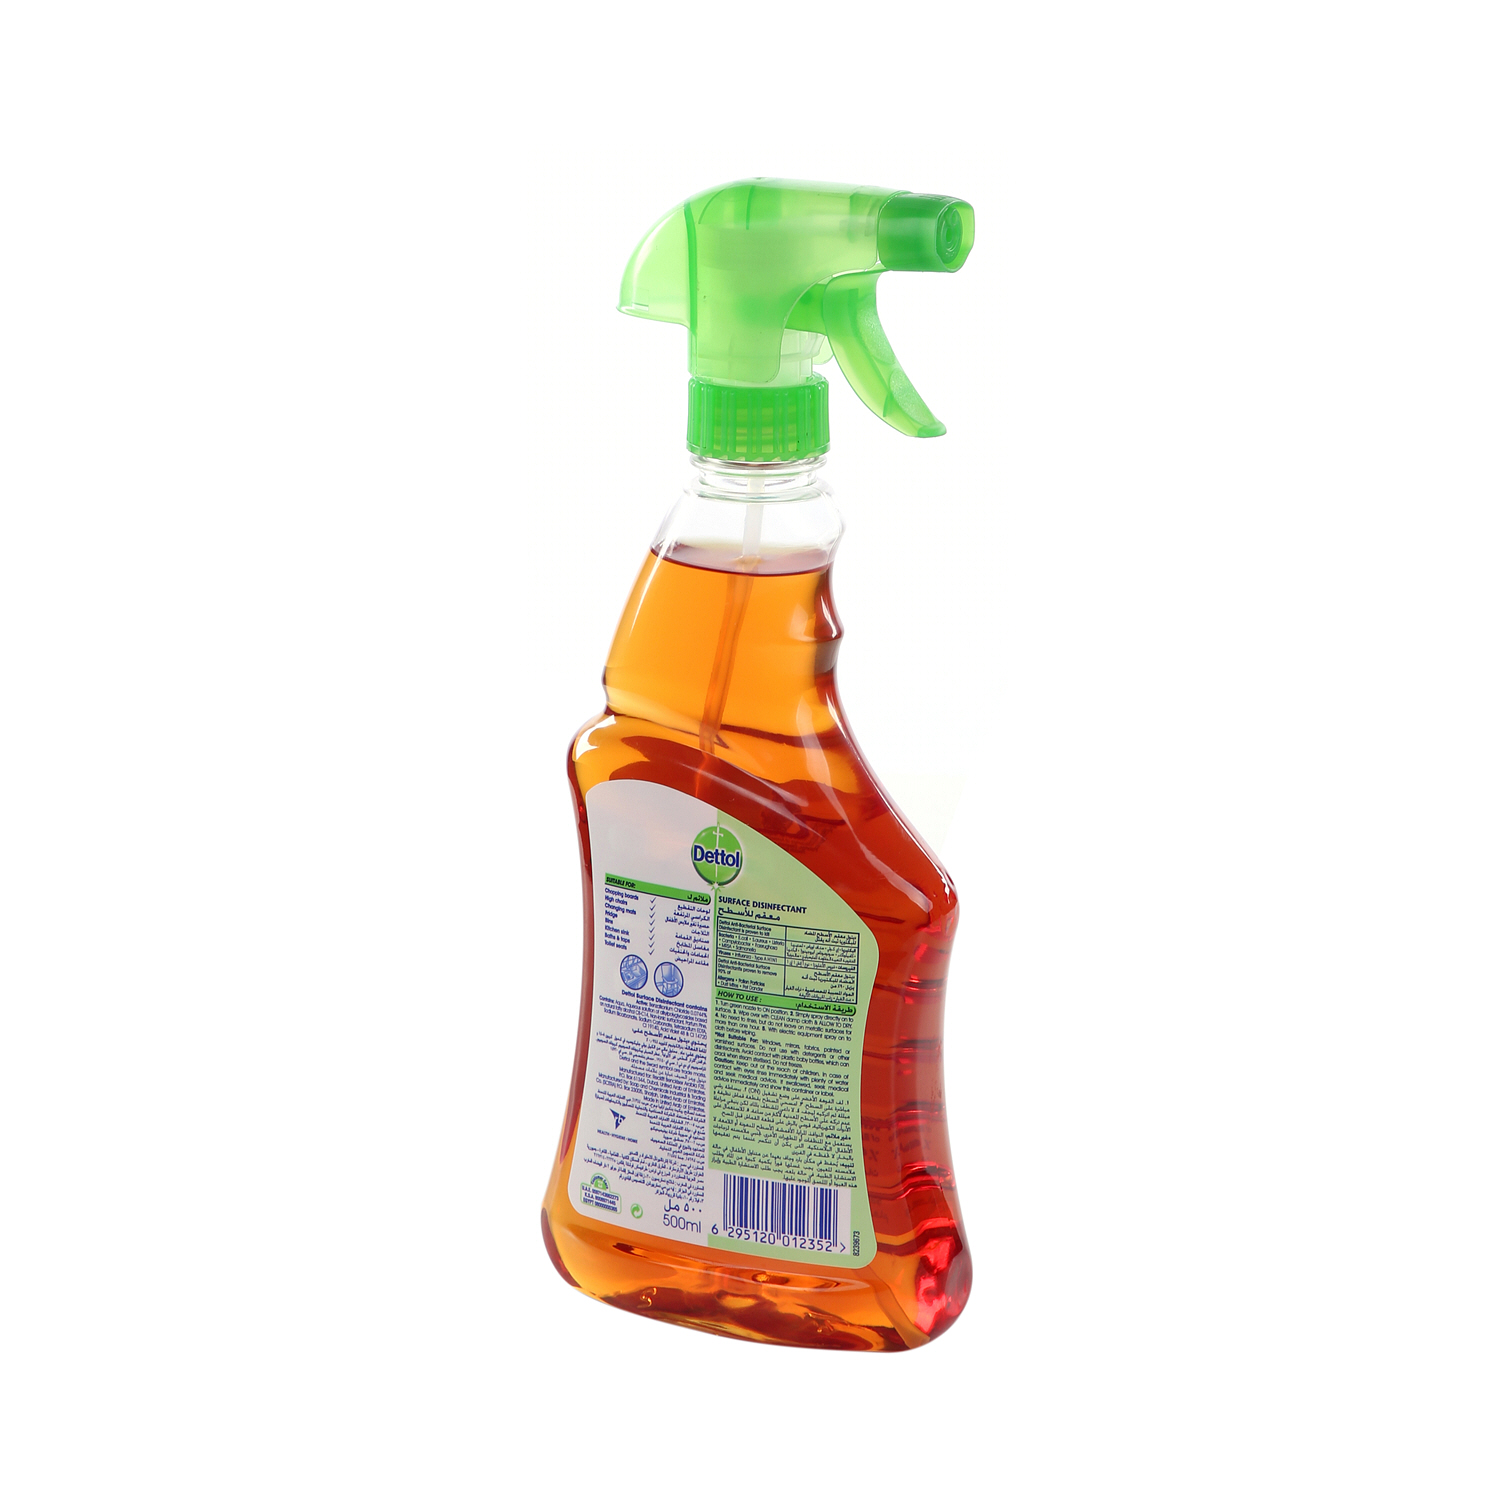 Dettol Surface Cleanser Trigger 500 ml